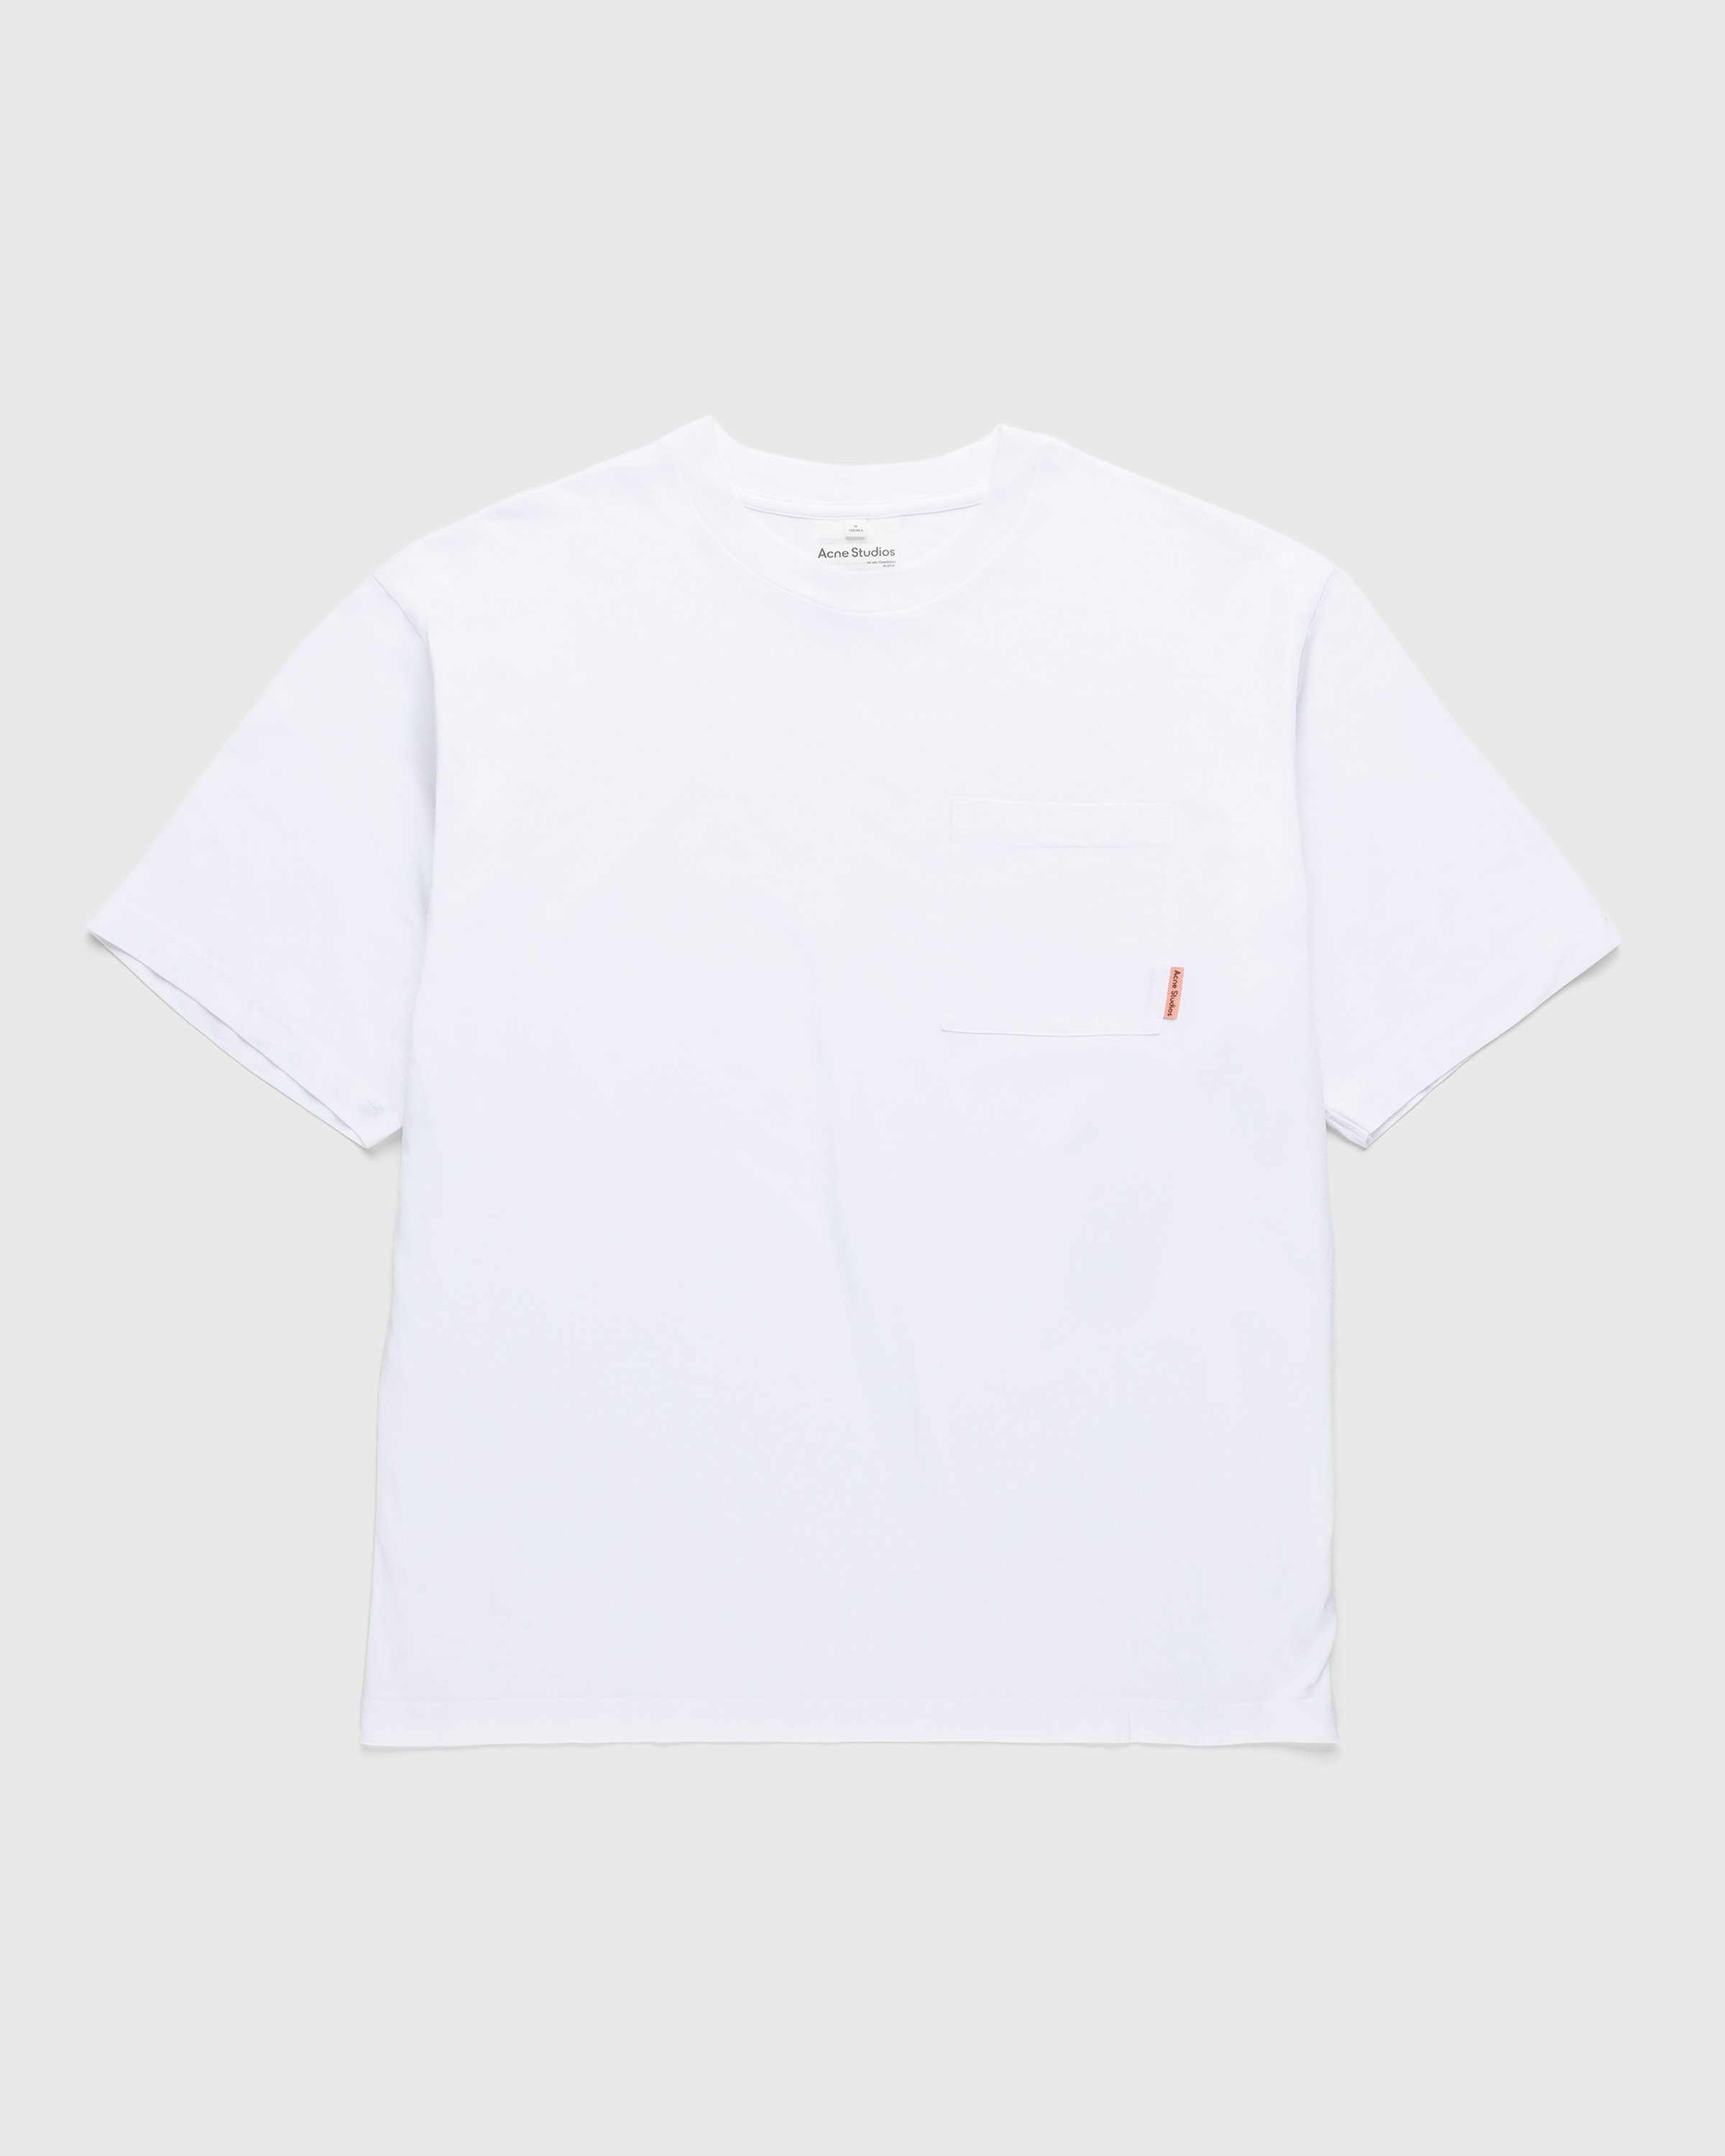 Acne Studios - Organic Cotton Pocket T-Shirt White - Clothing - White - Image 1